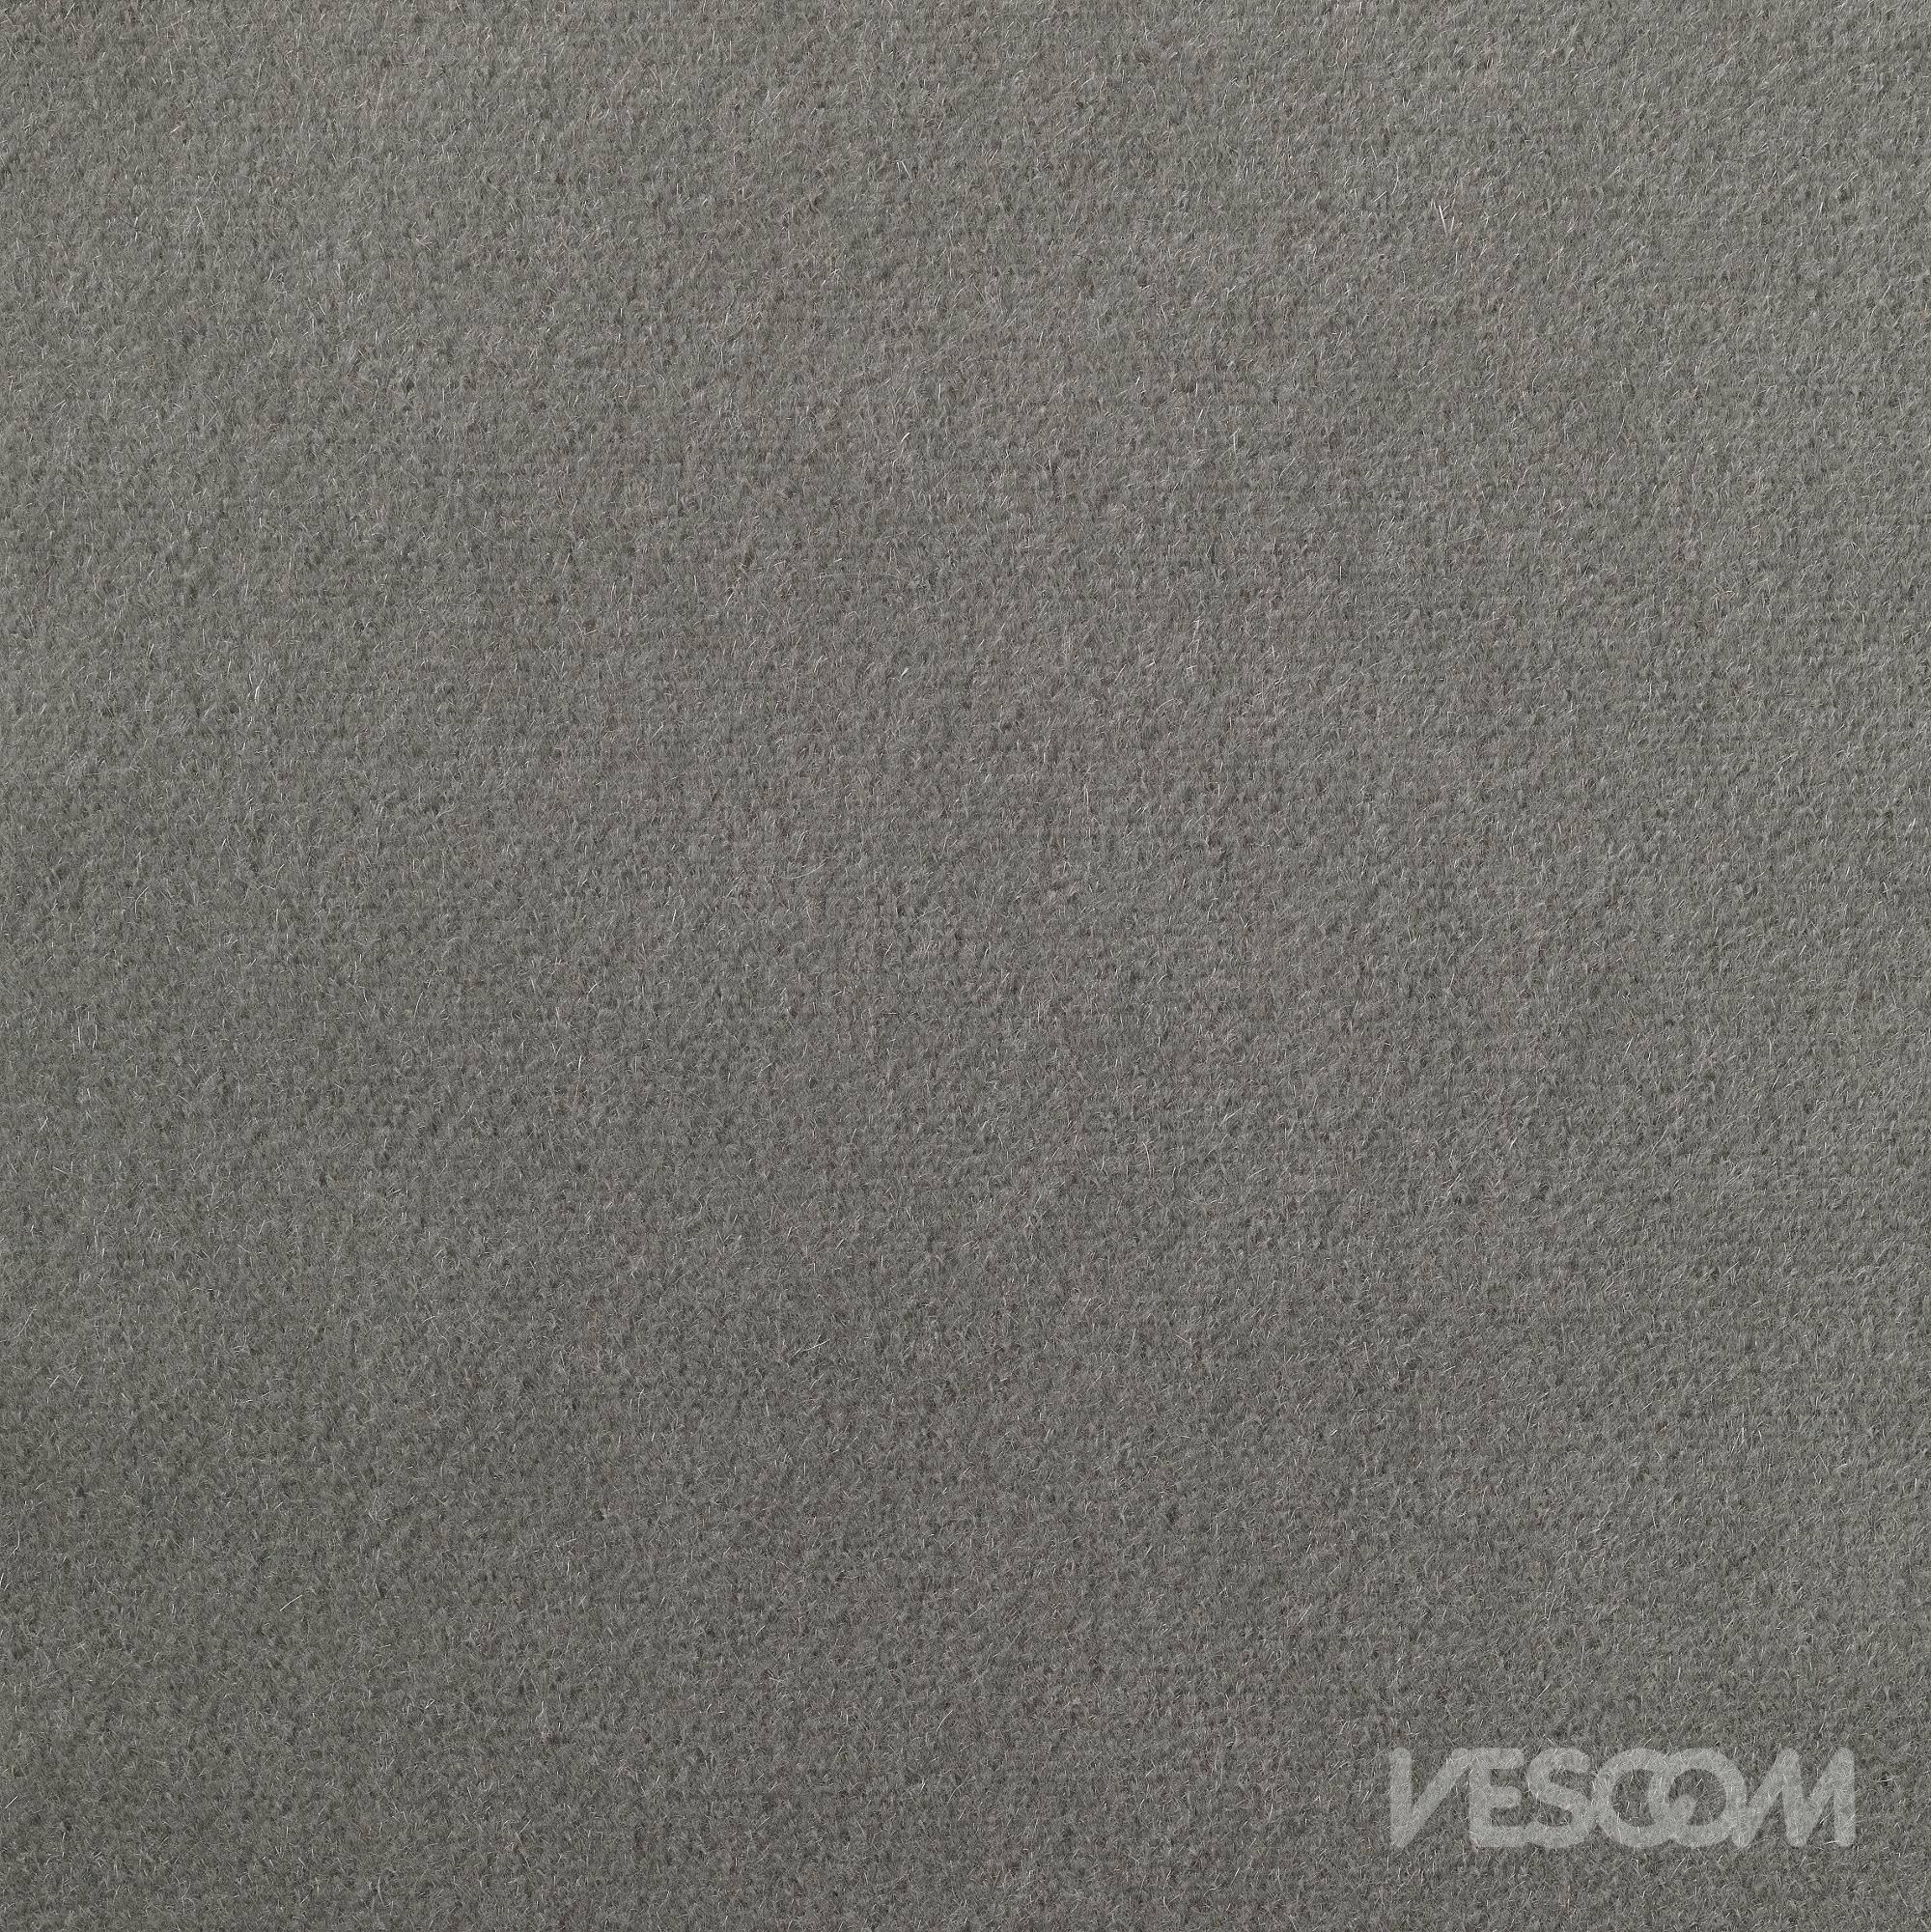 Vescom Ariana Upholstery Fabric 7061.03